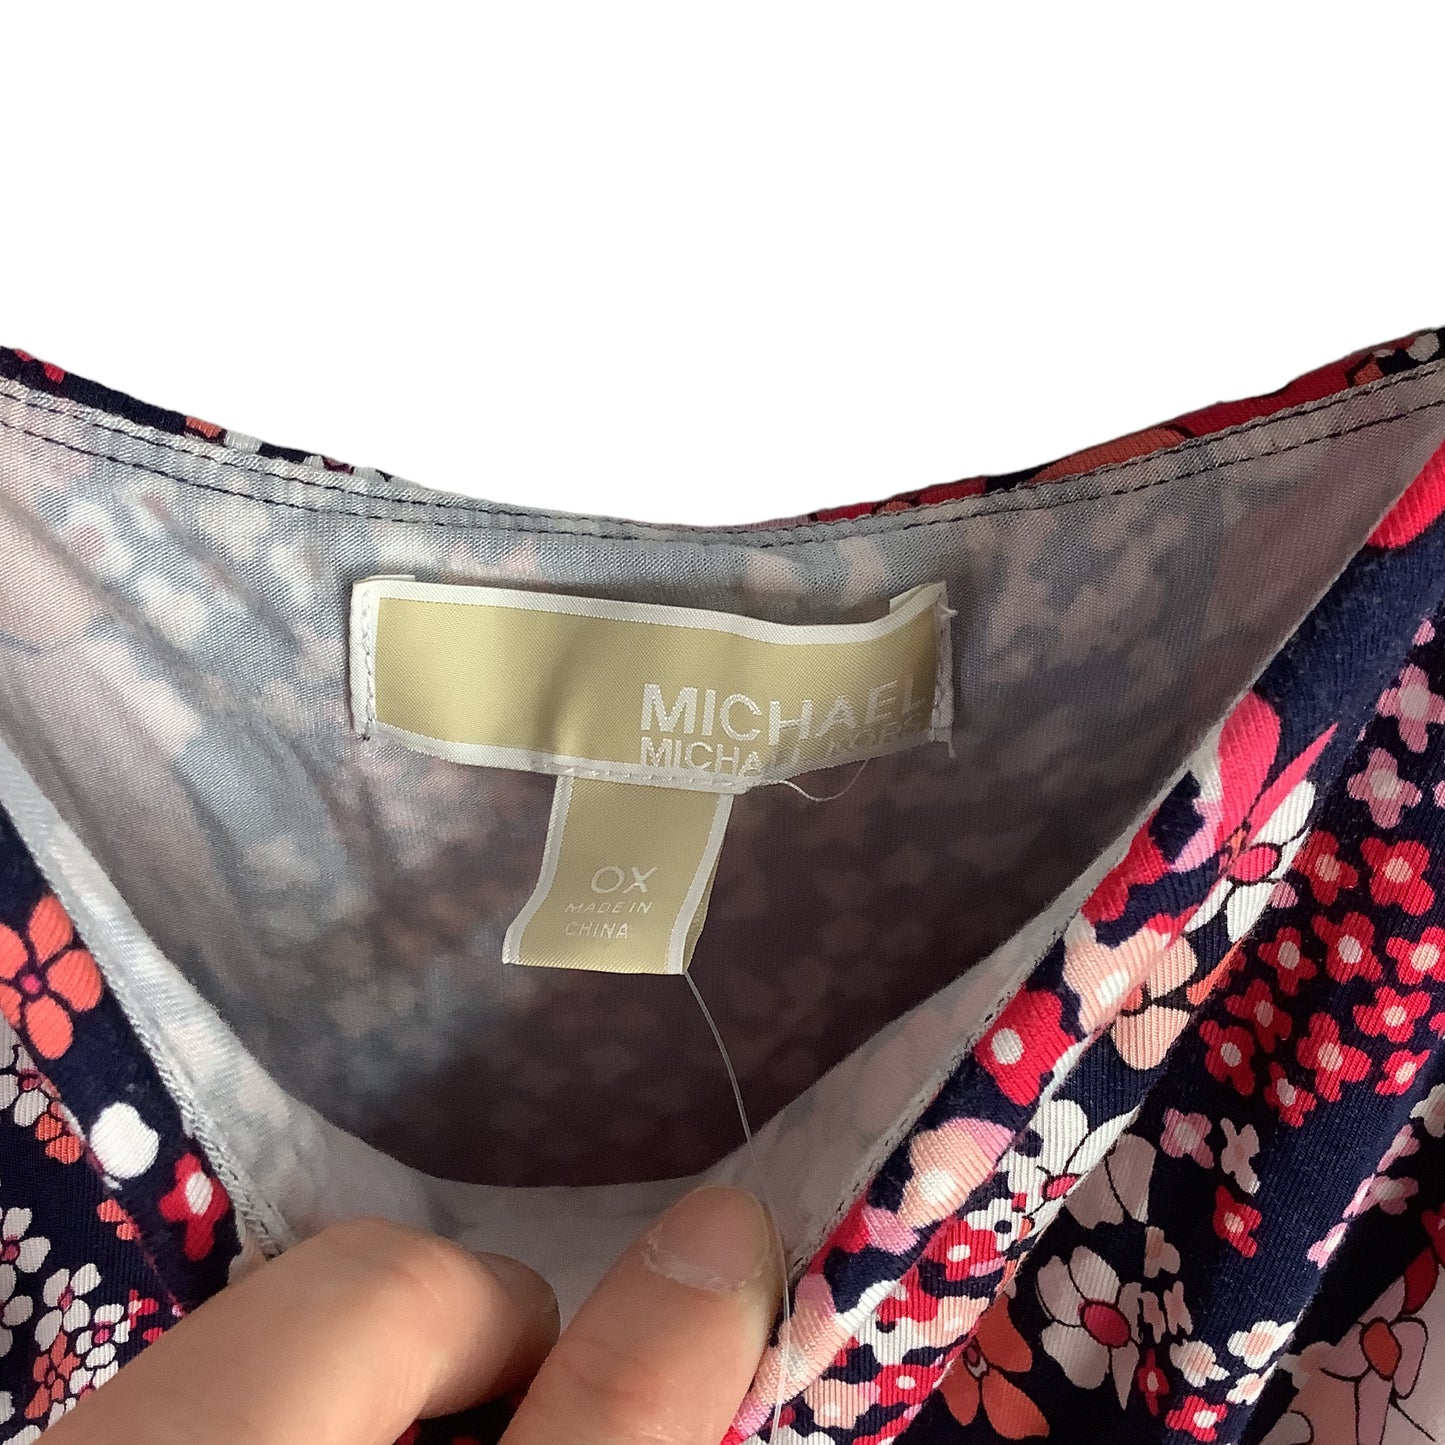 Dress Casual Midi By Michael By Michael Kors  Size: Xl (OX)